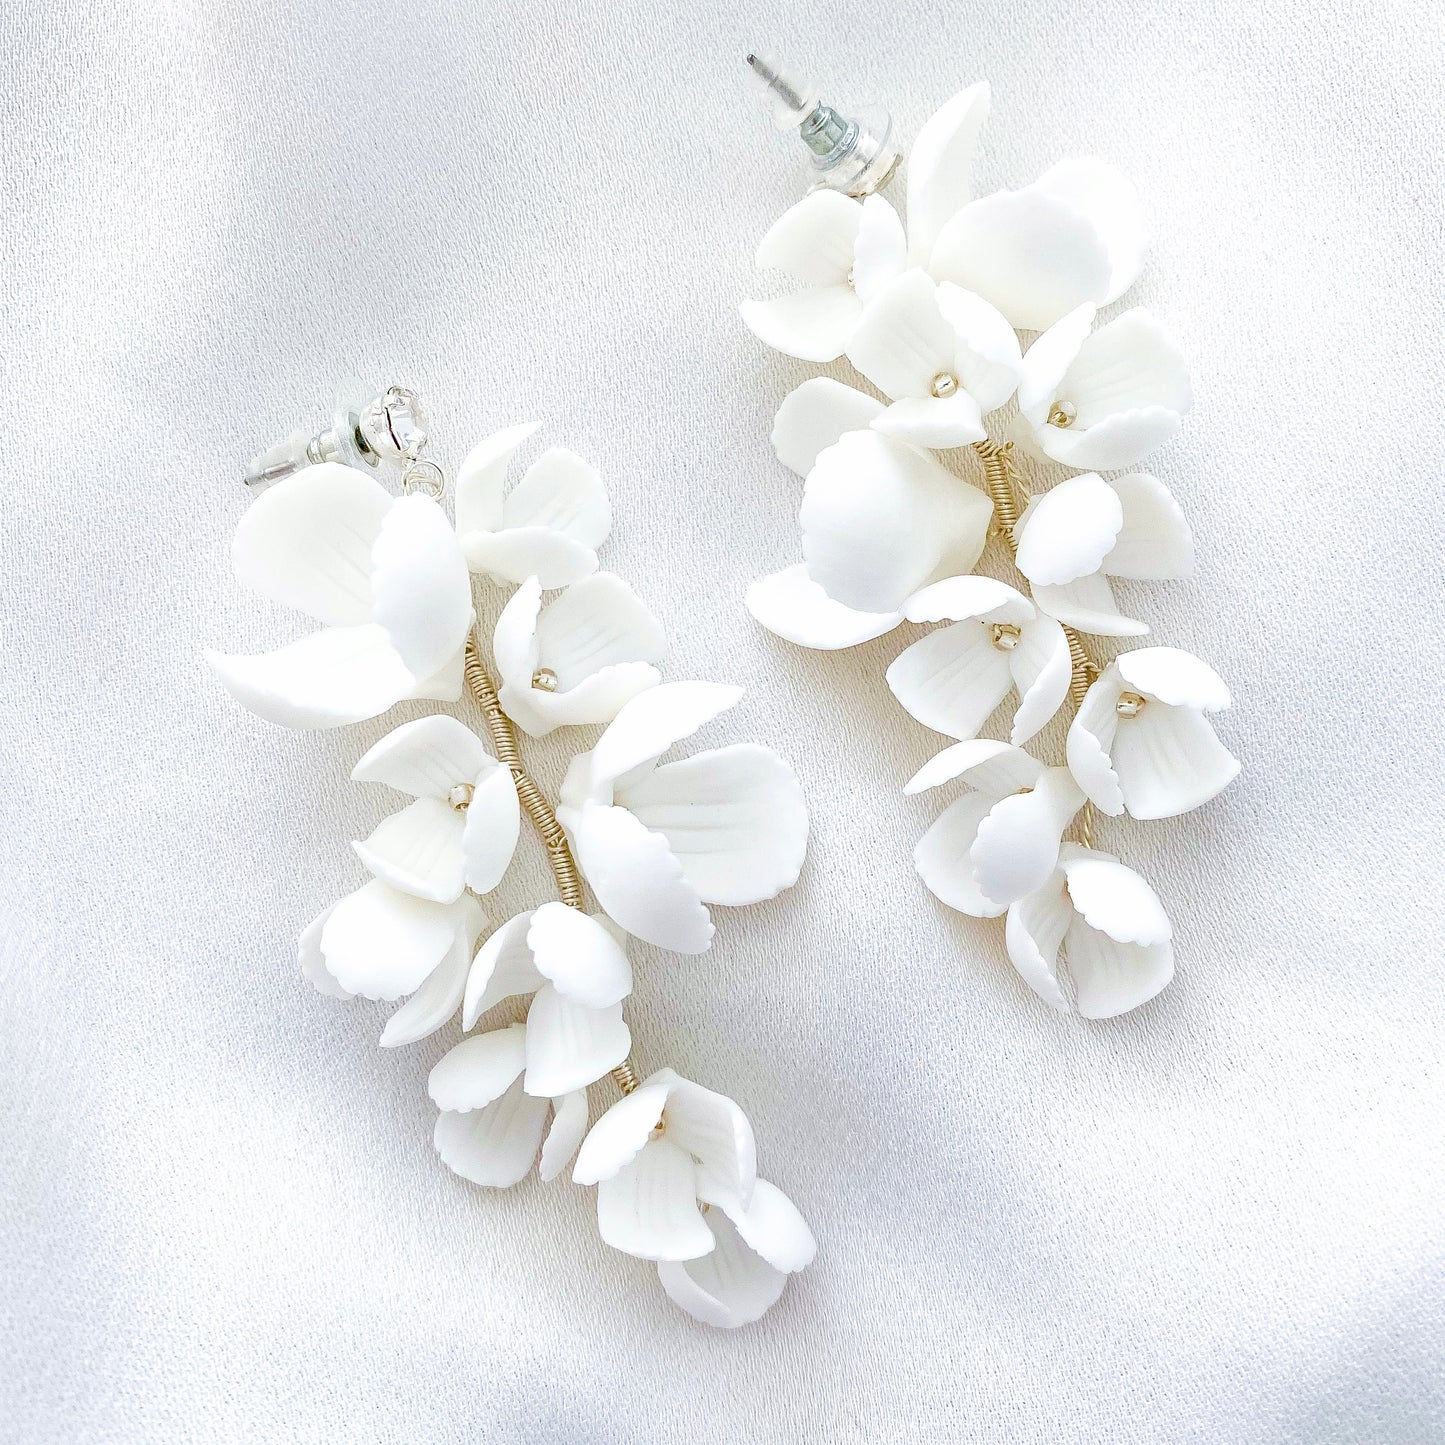 Large Magnolia Porcelain Drop Statement Earrings